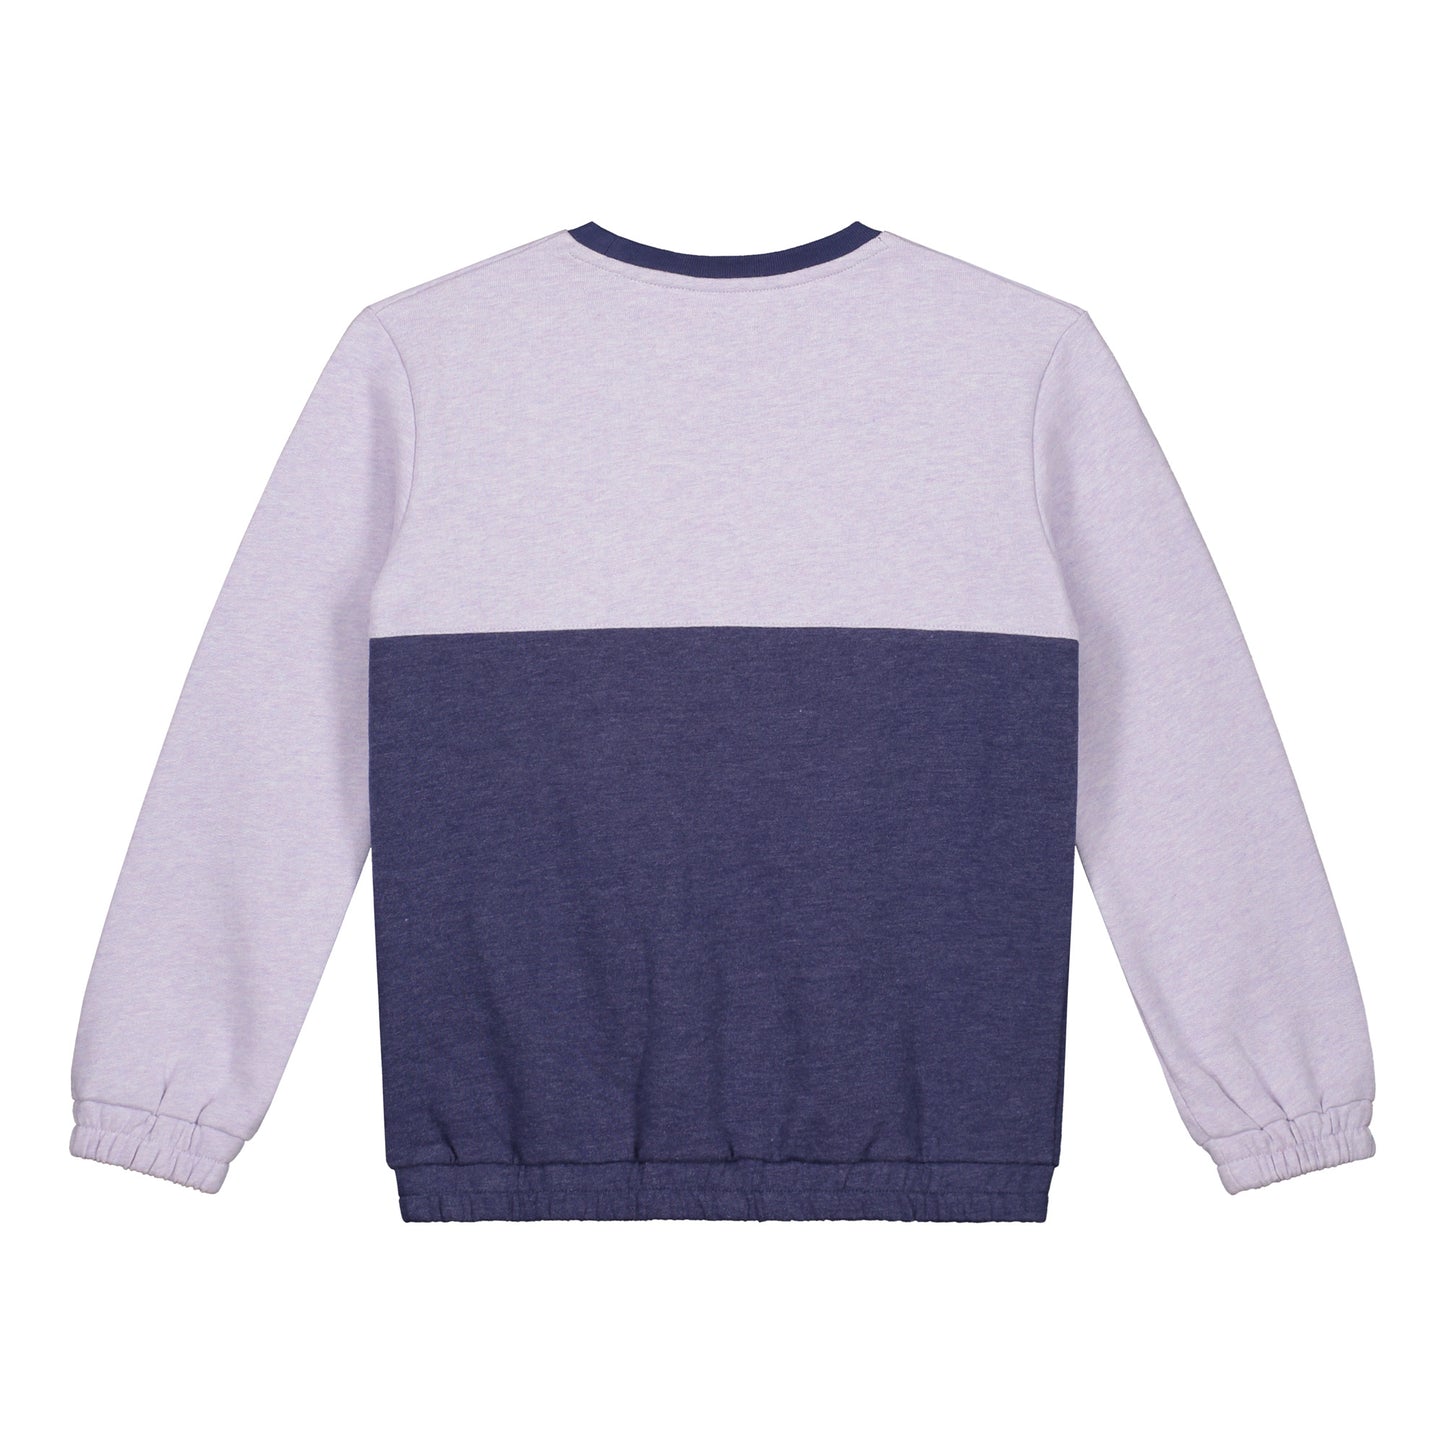 Purple & blue color block Sweatshirt